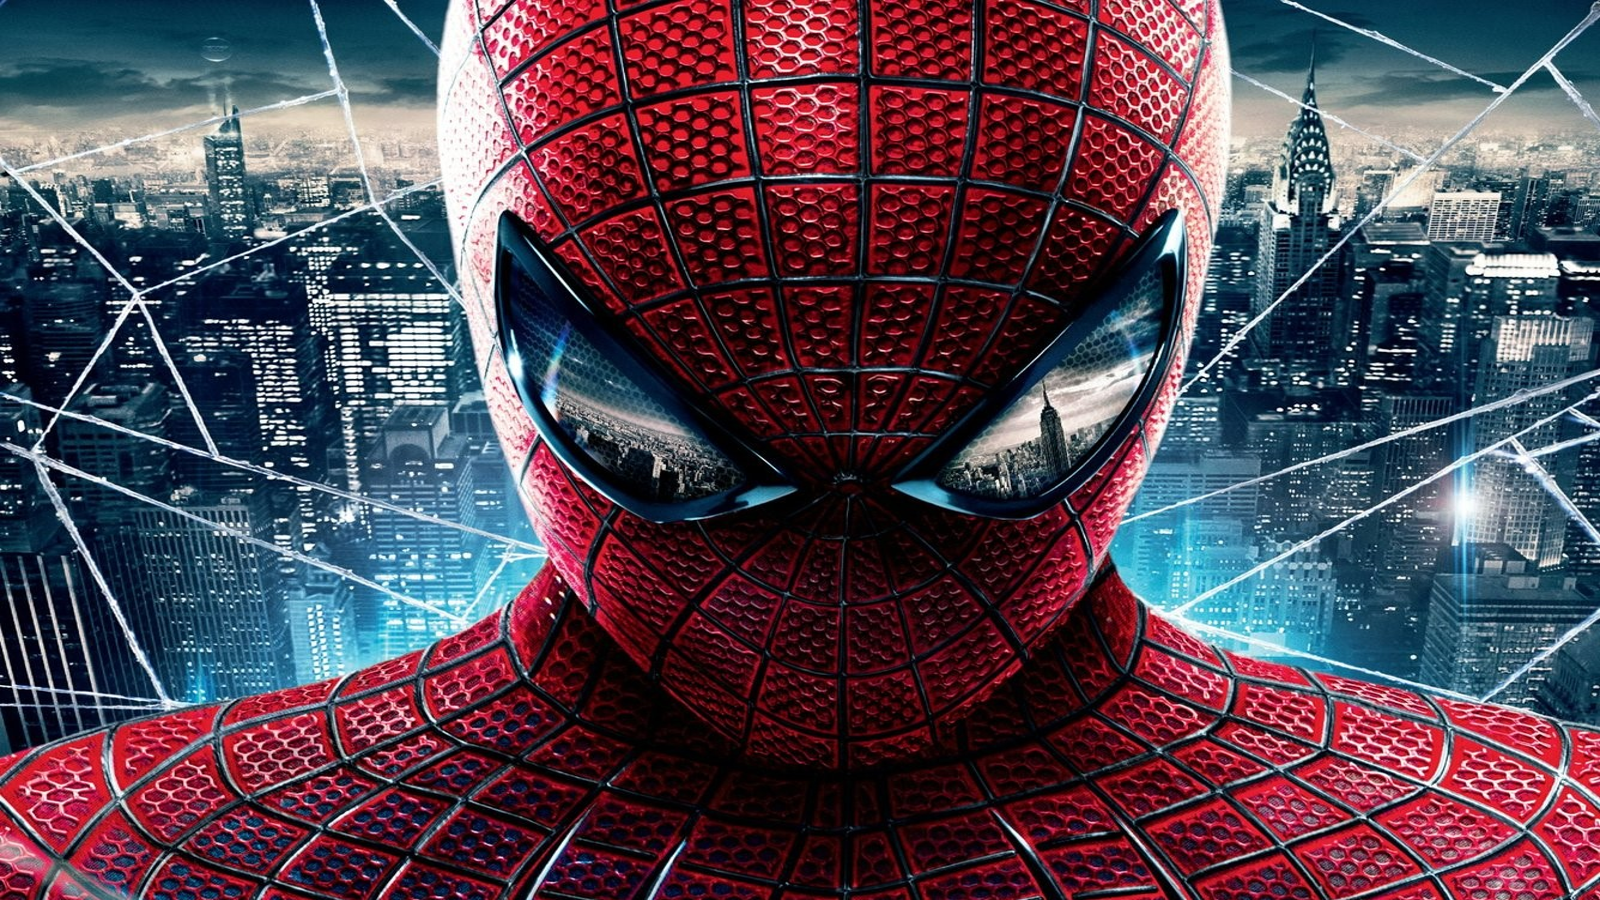 The Amazing Spider-Man - Cinema